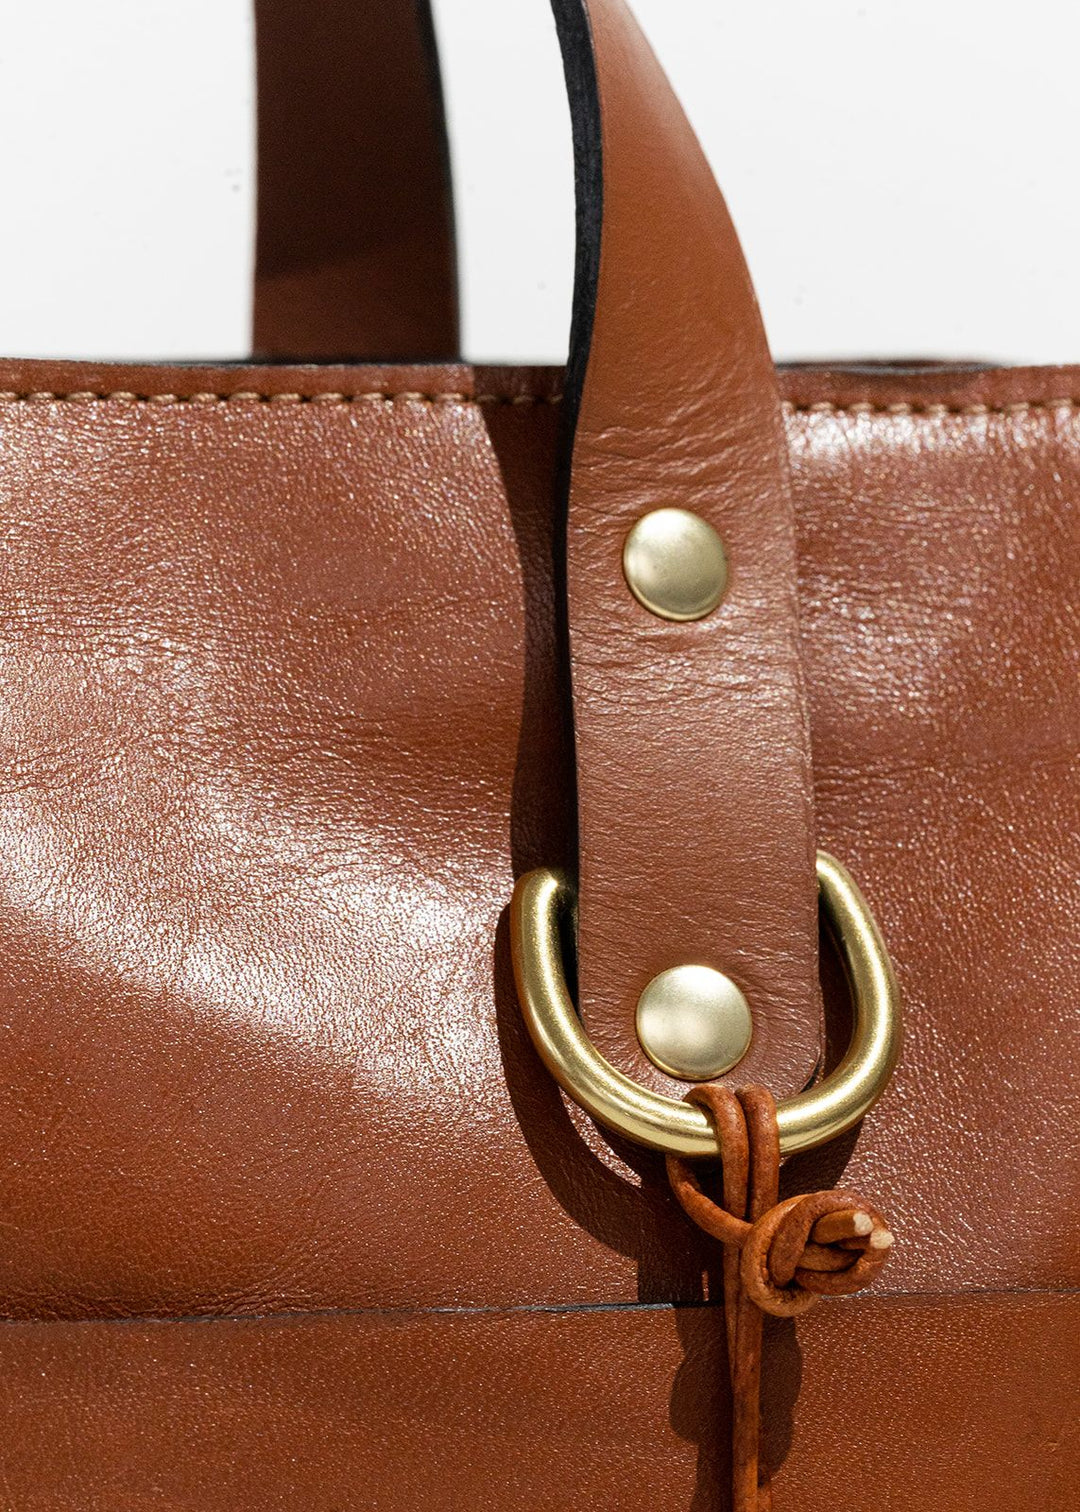 Merci Marie Womens Bag Purse Handbag Shoulder Brown Leather Made